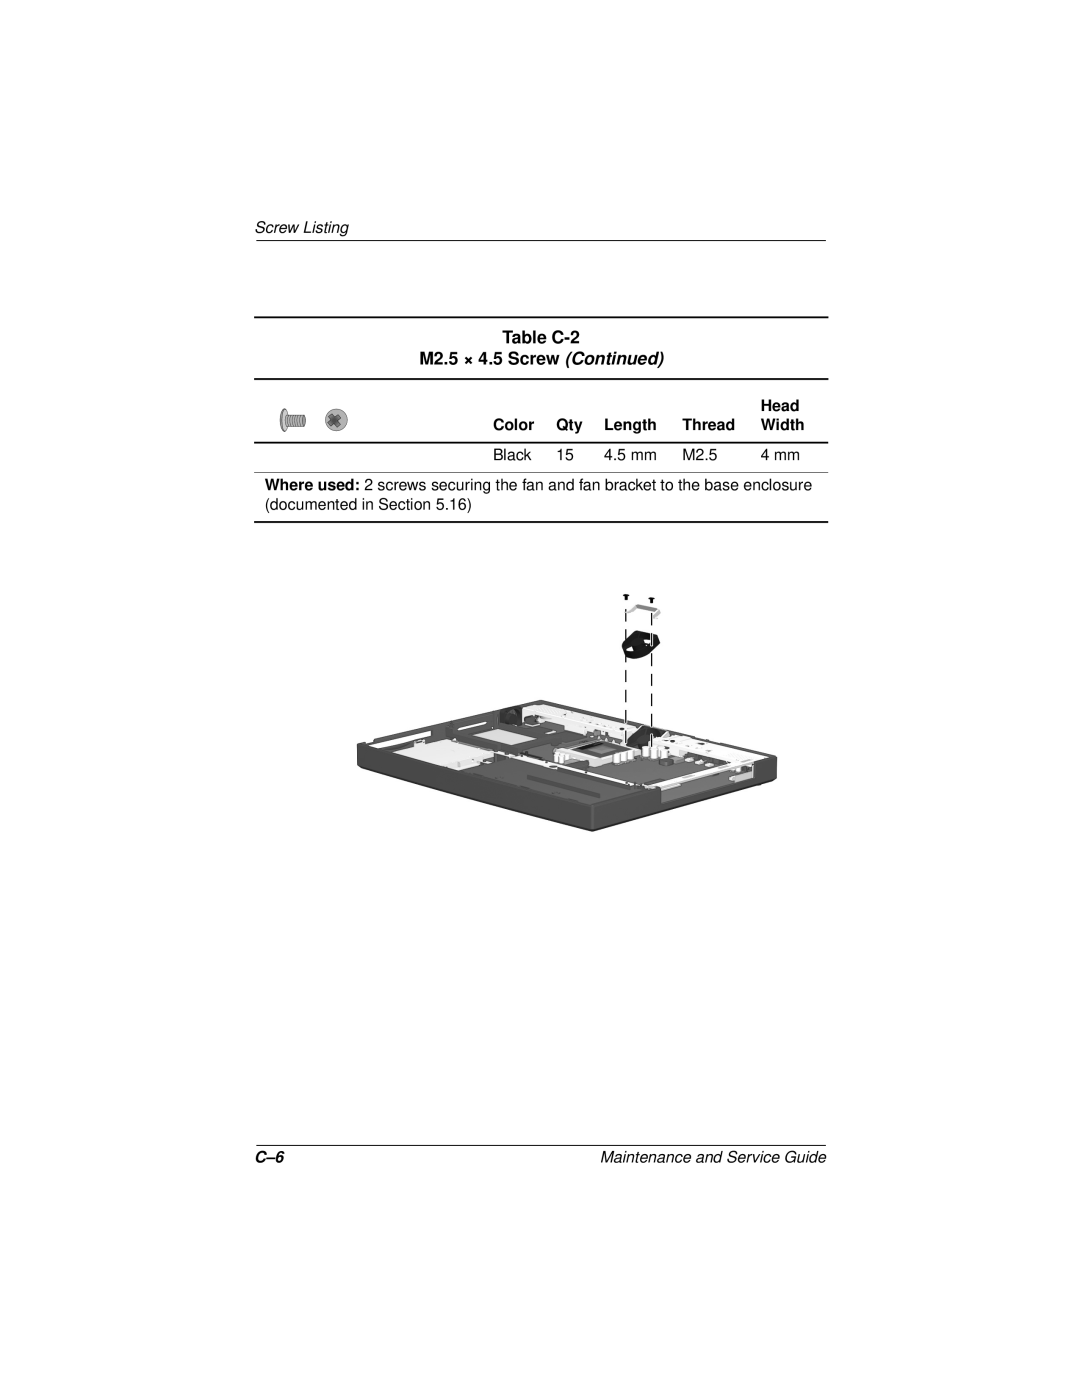 Compaq N110 manual Table C-2 M2.5 × 4.5 Screw Continued, Screw Listing 